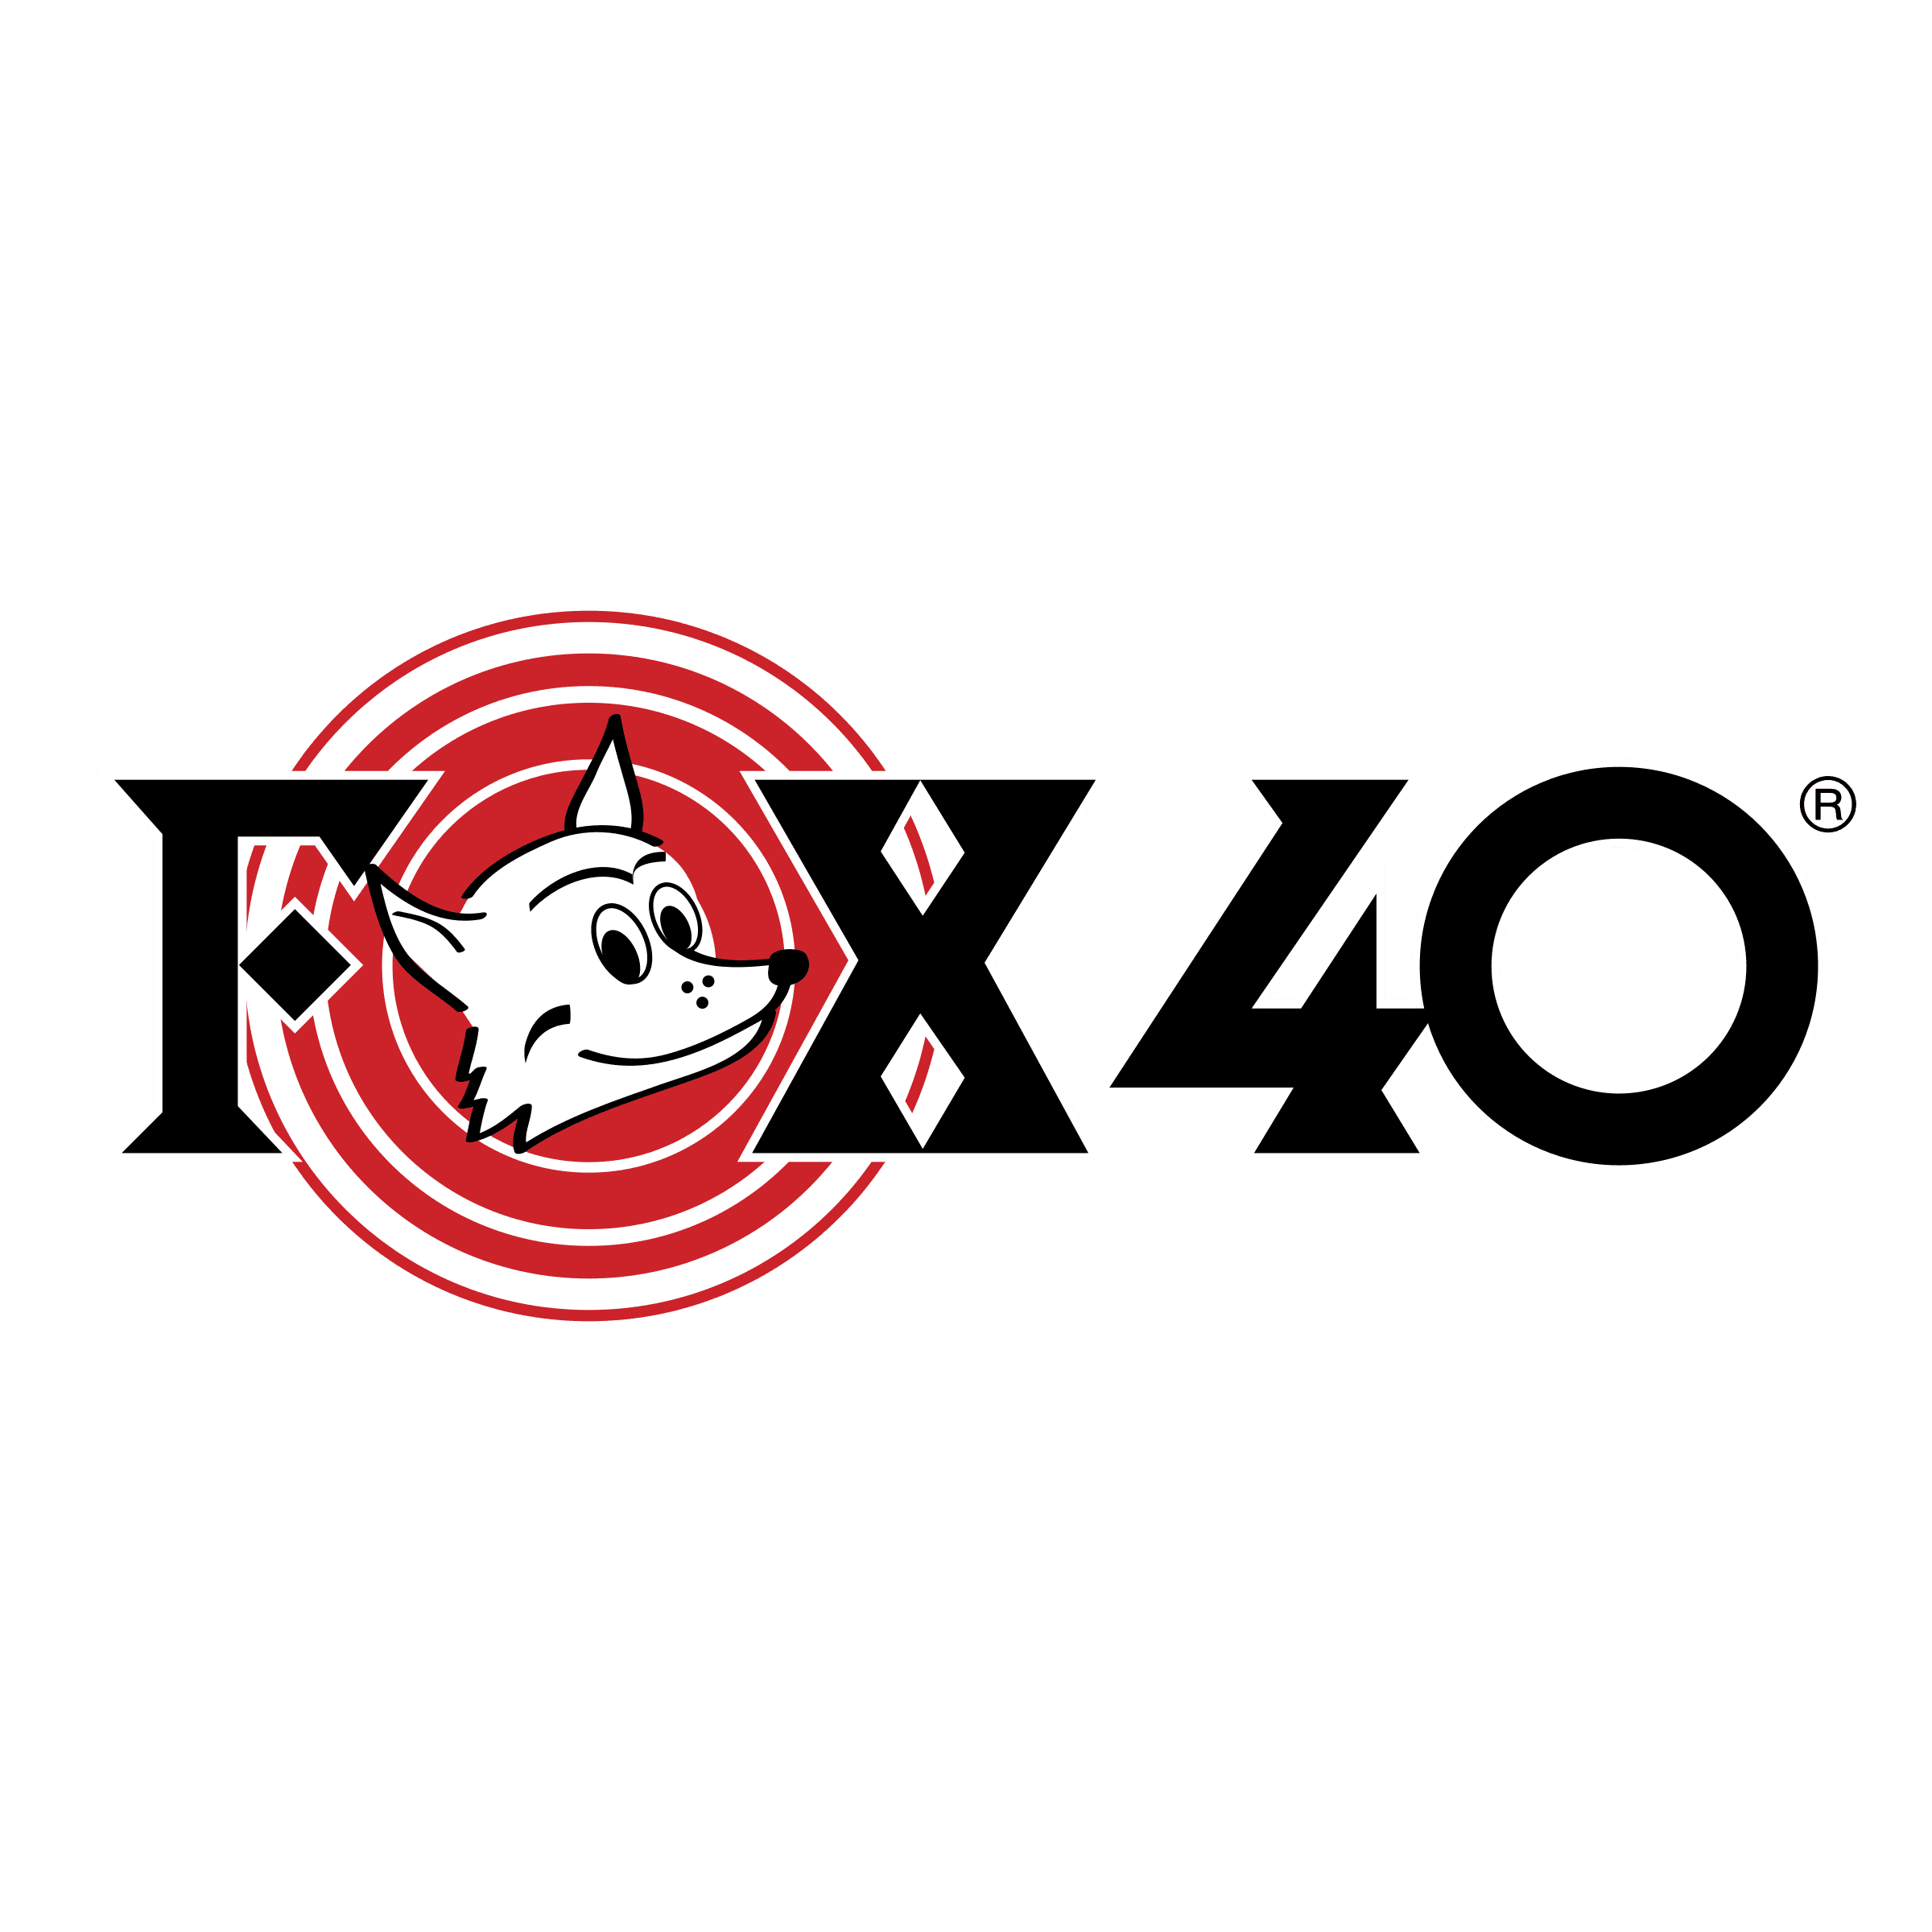 Fox40